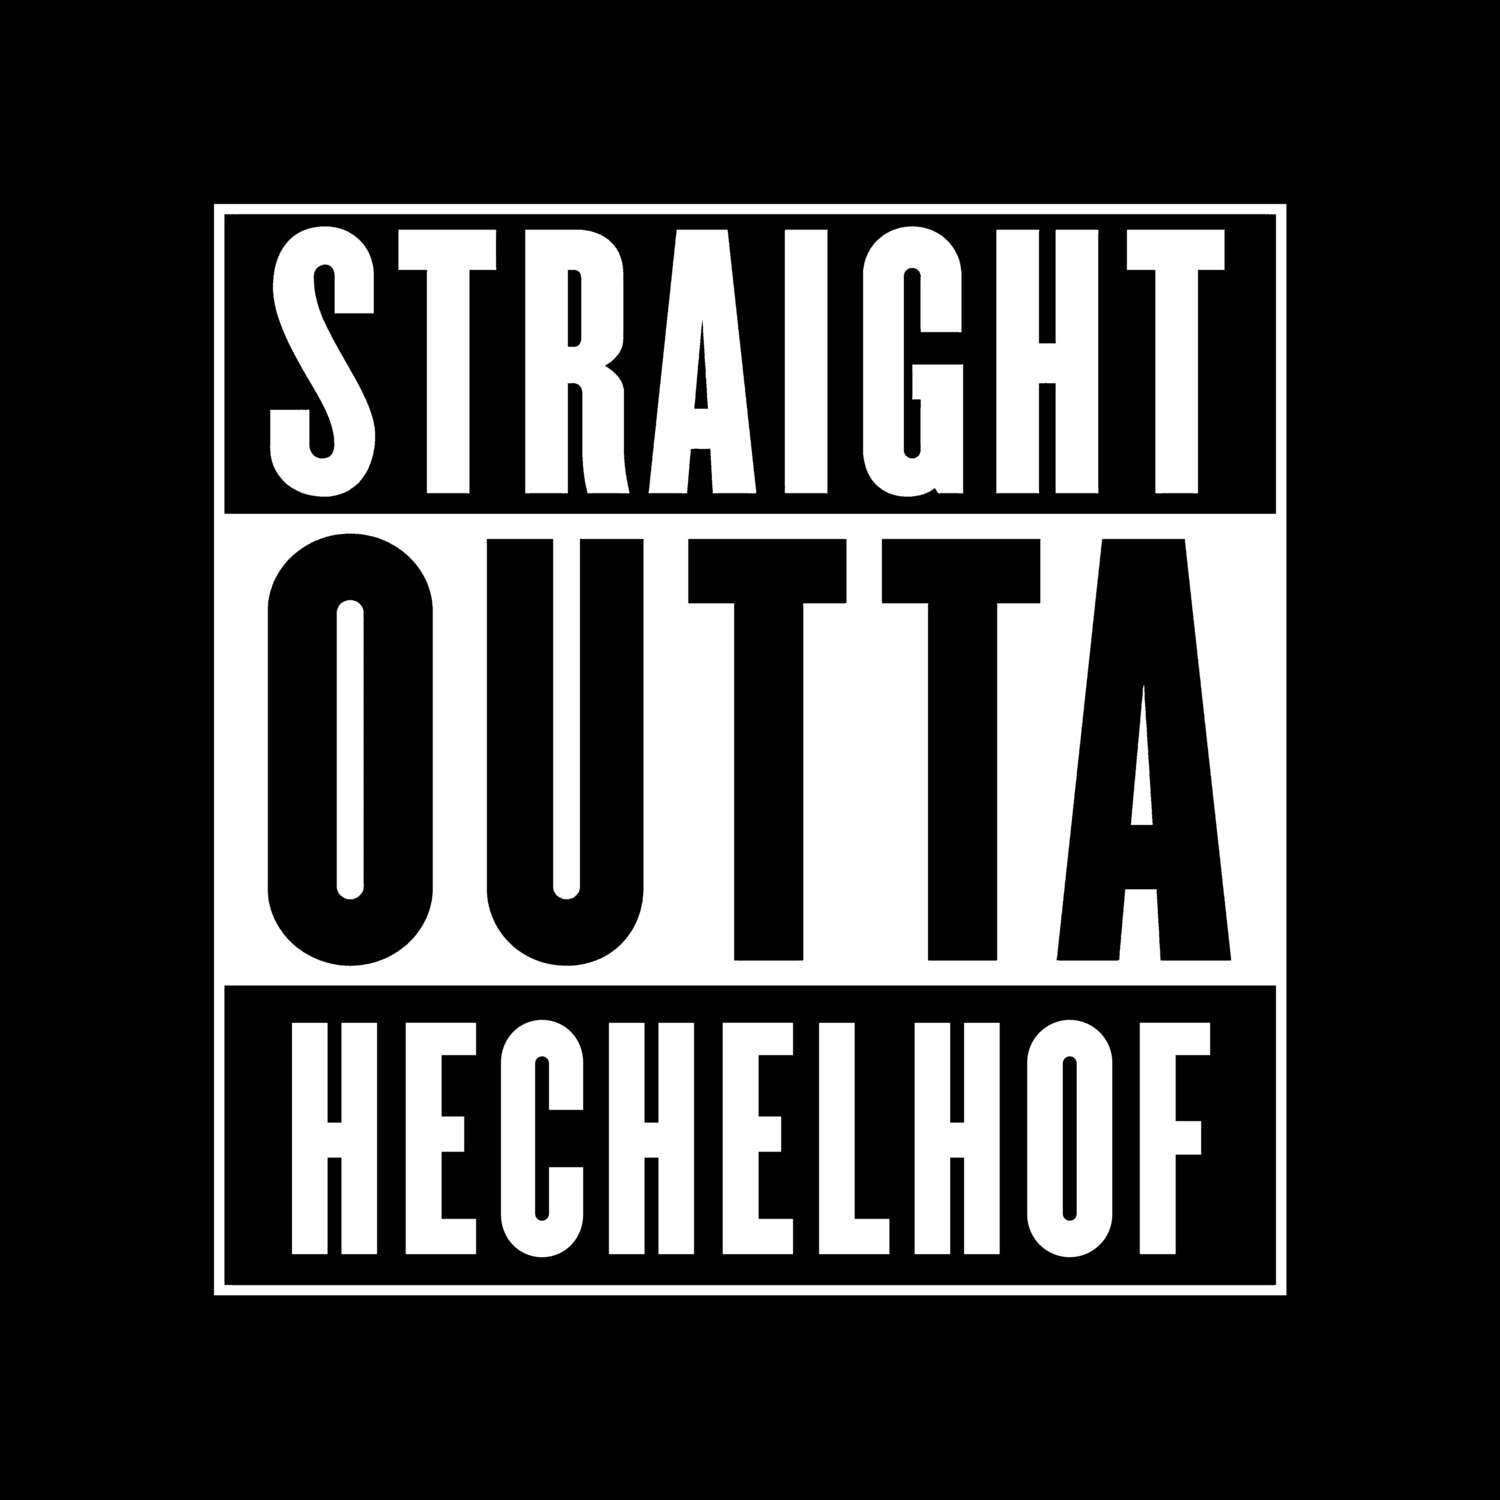 Hechelhof T-Shirt »Straight Outta«